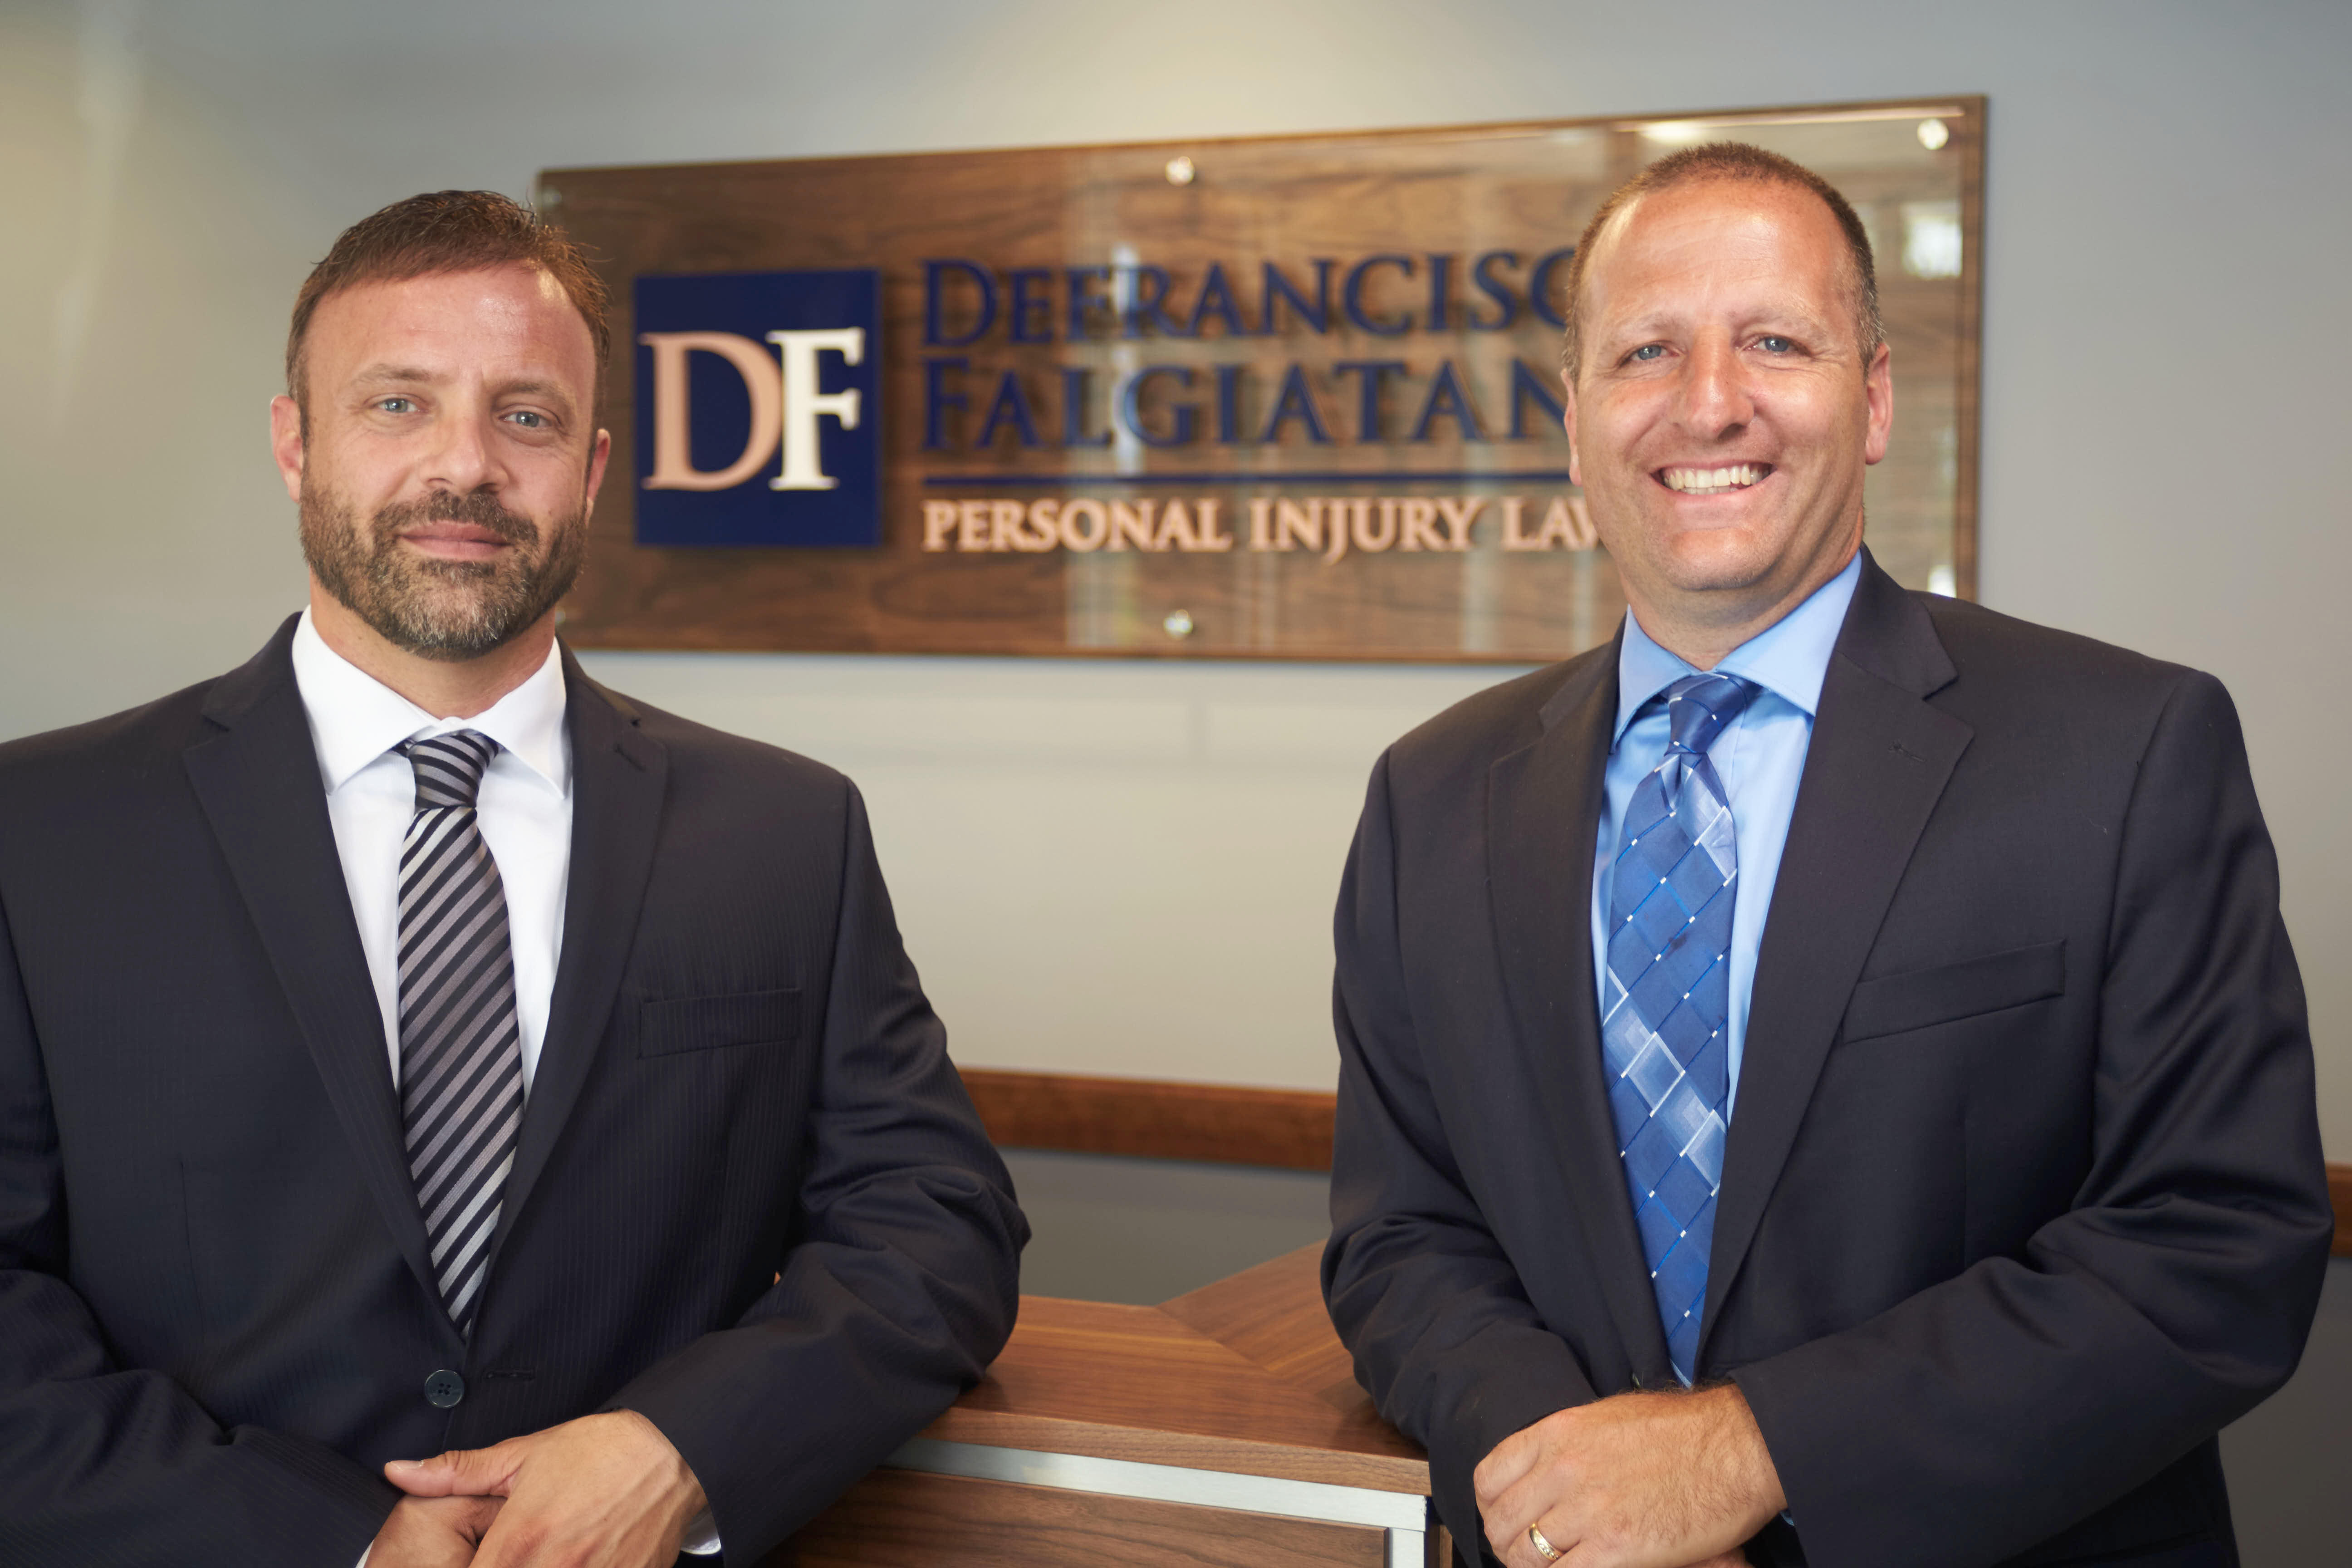 Jeff DeFrancisco, Esq. & Charlie Falgiatano, Esq. DeFrancisco & Falgiatano Personal Injury Lawyers East Syracuse (315)479-9000